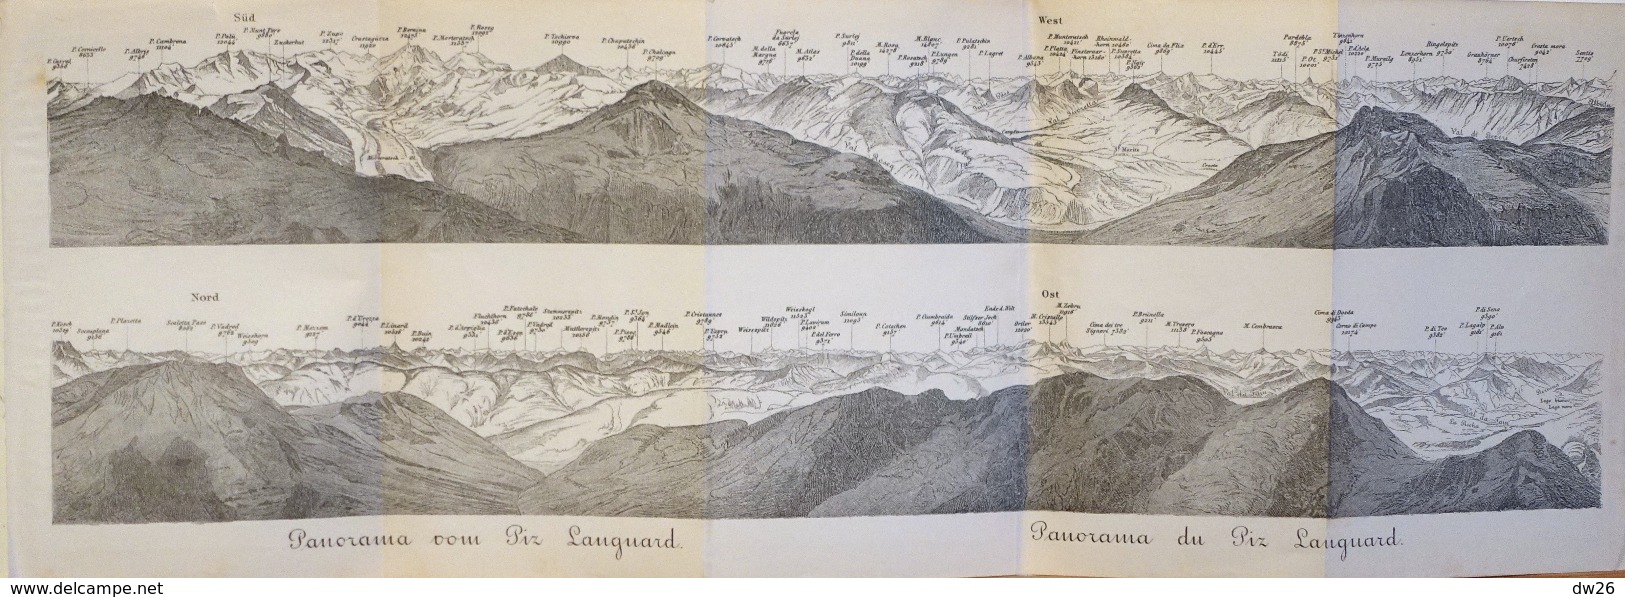 Carte Géographique: Panorama Baedeker 1907 - Panorama Vom Du Piz Languard (Suisse, Grisons) - Geographische Kaarten